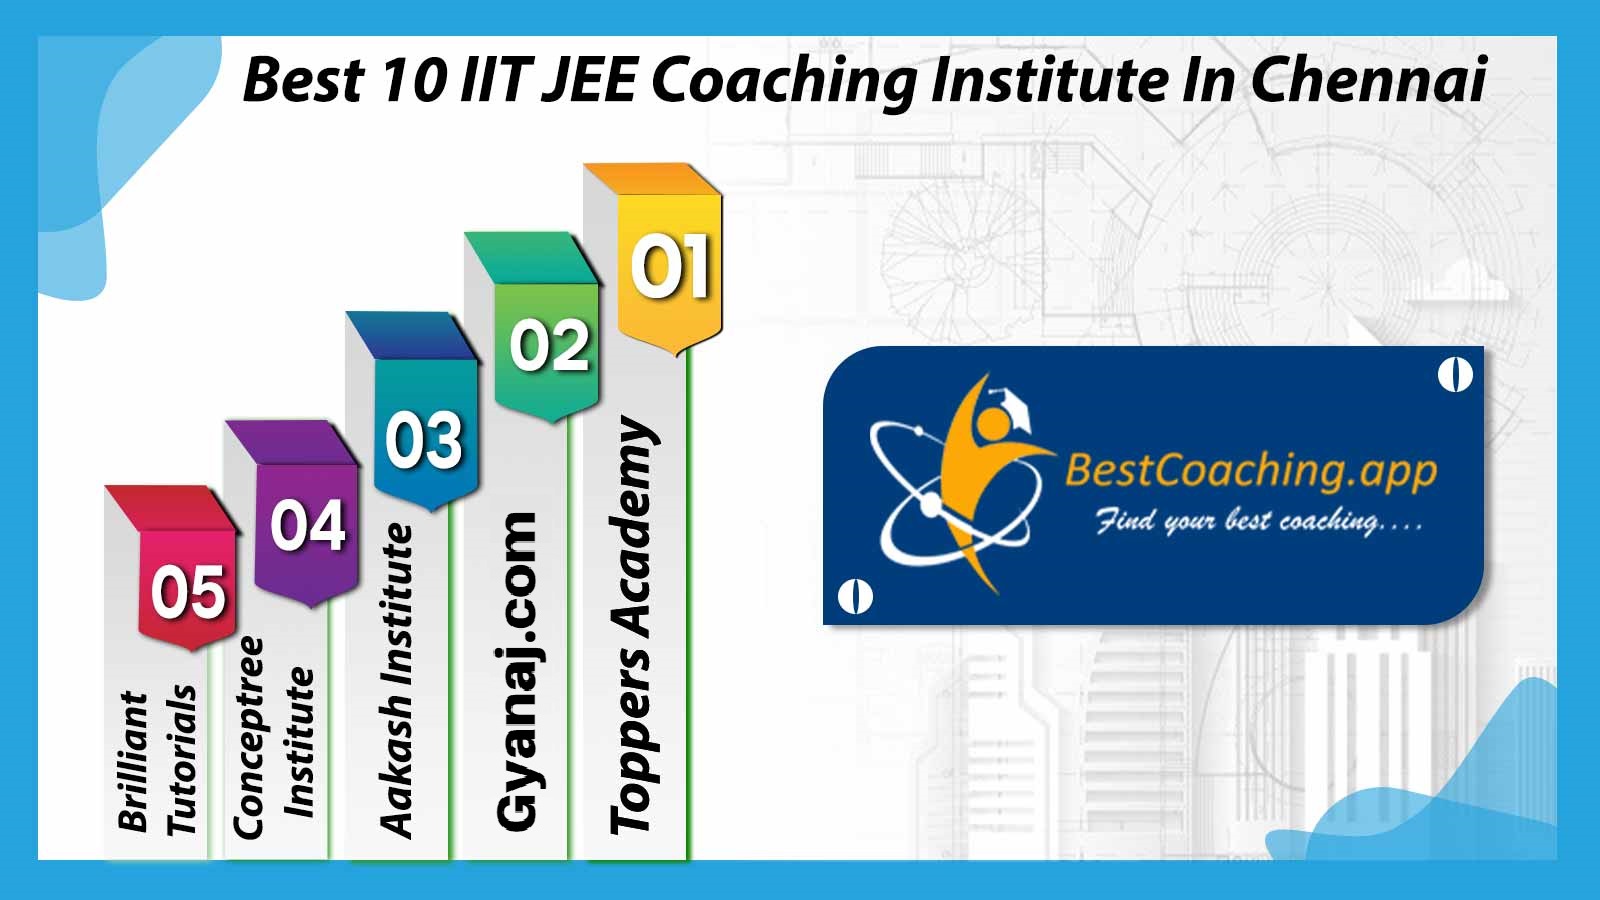 Best 10 IIT JEE Coaching Institute In Chennai